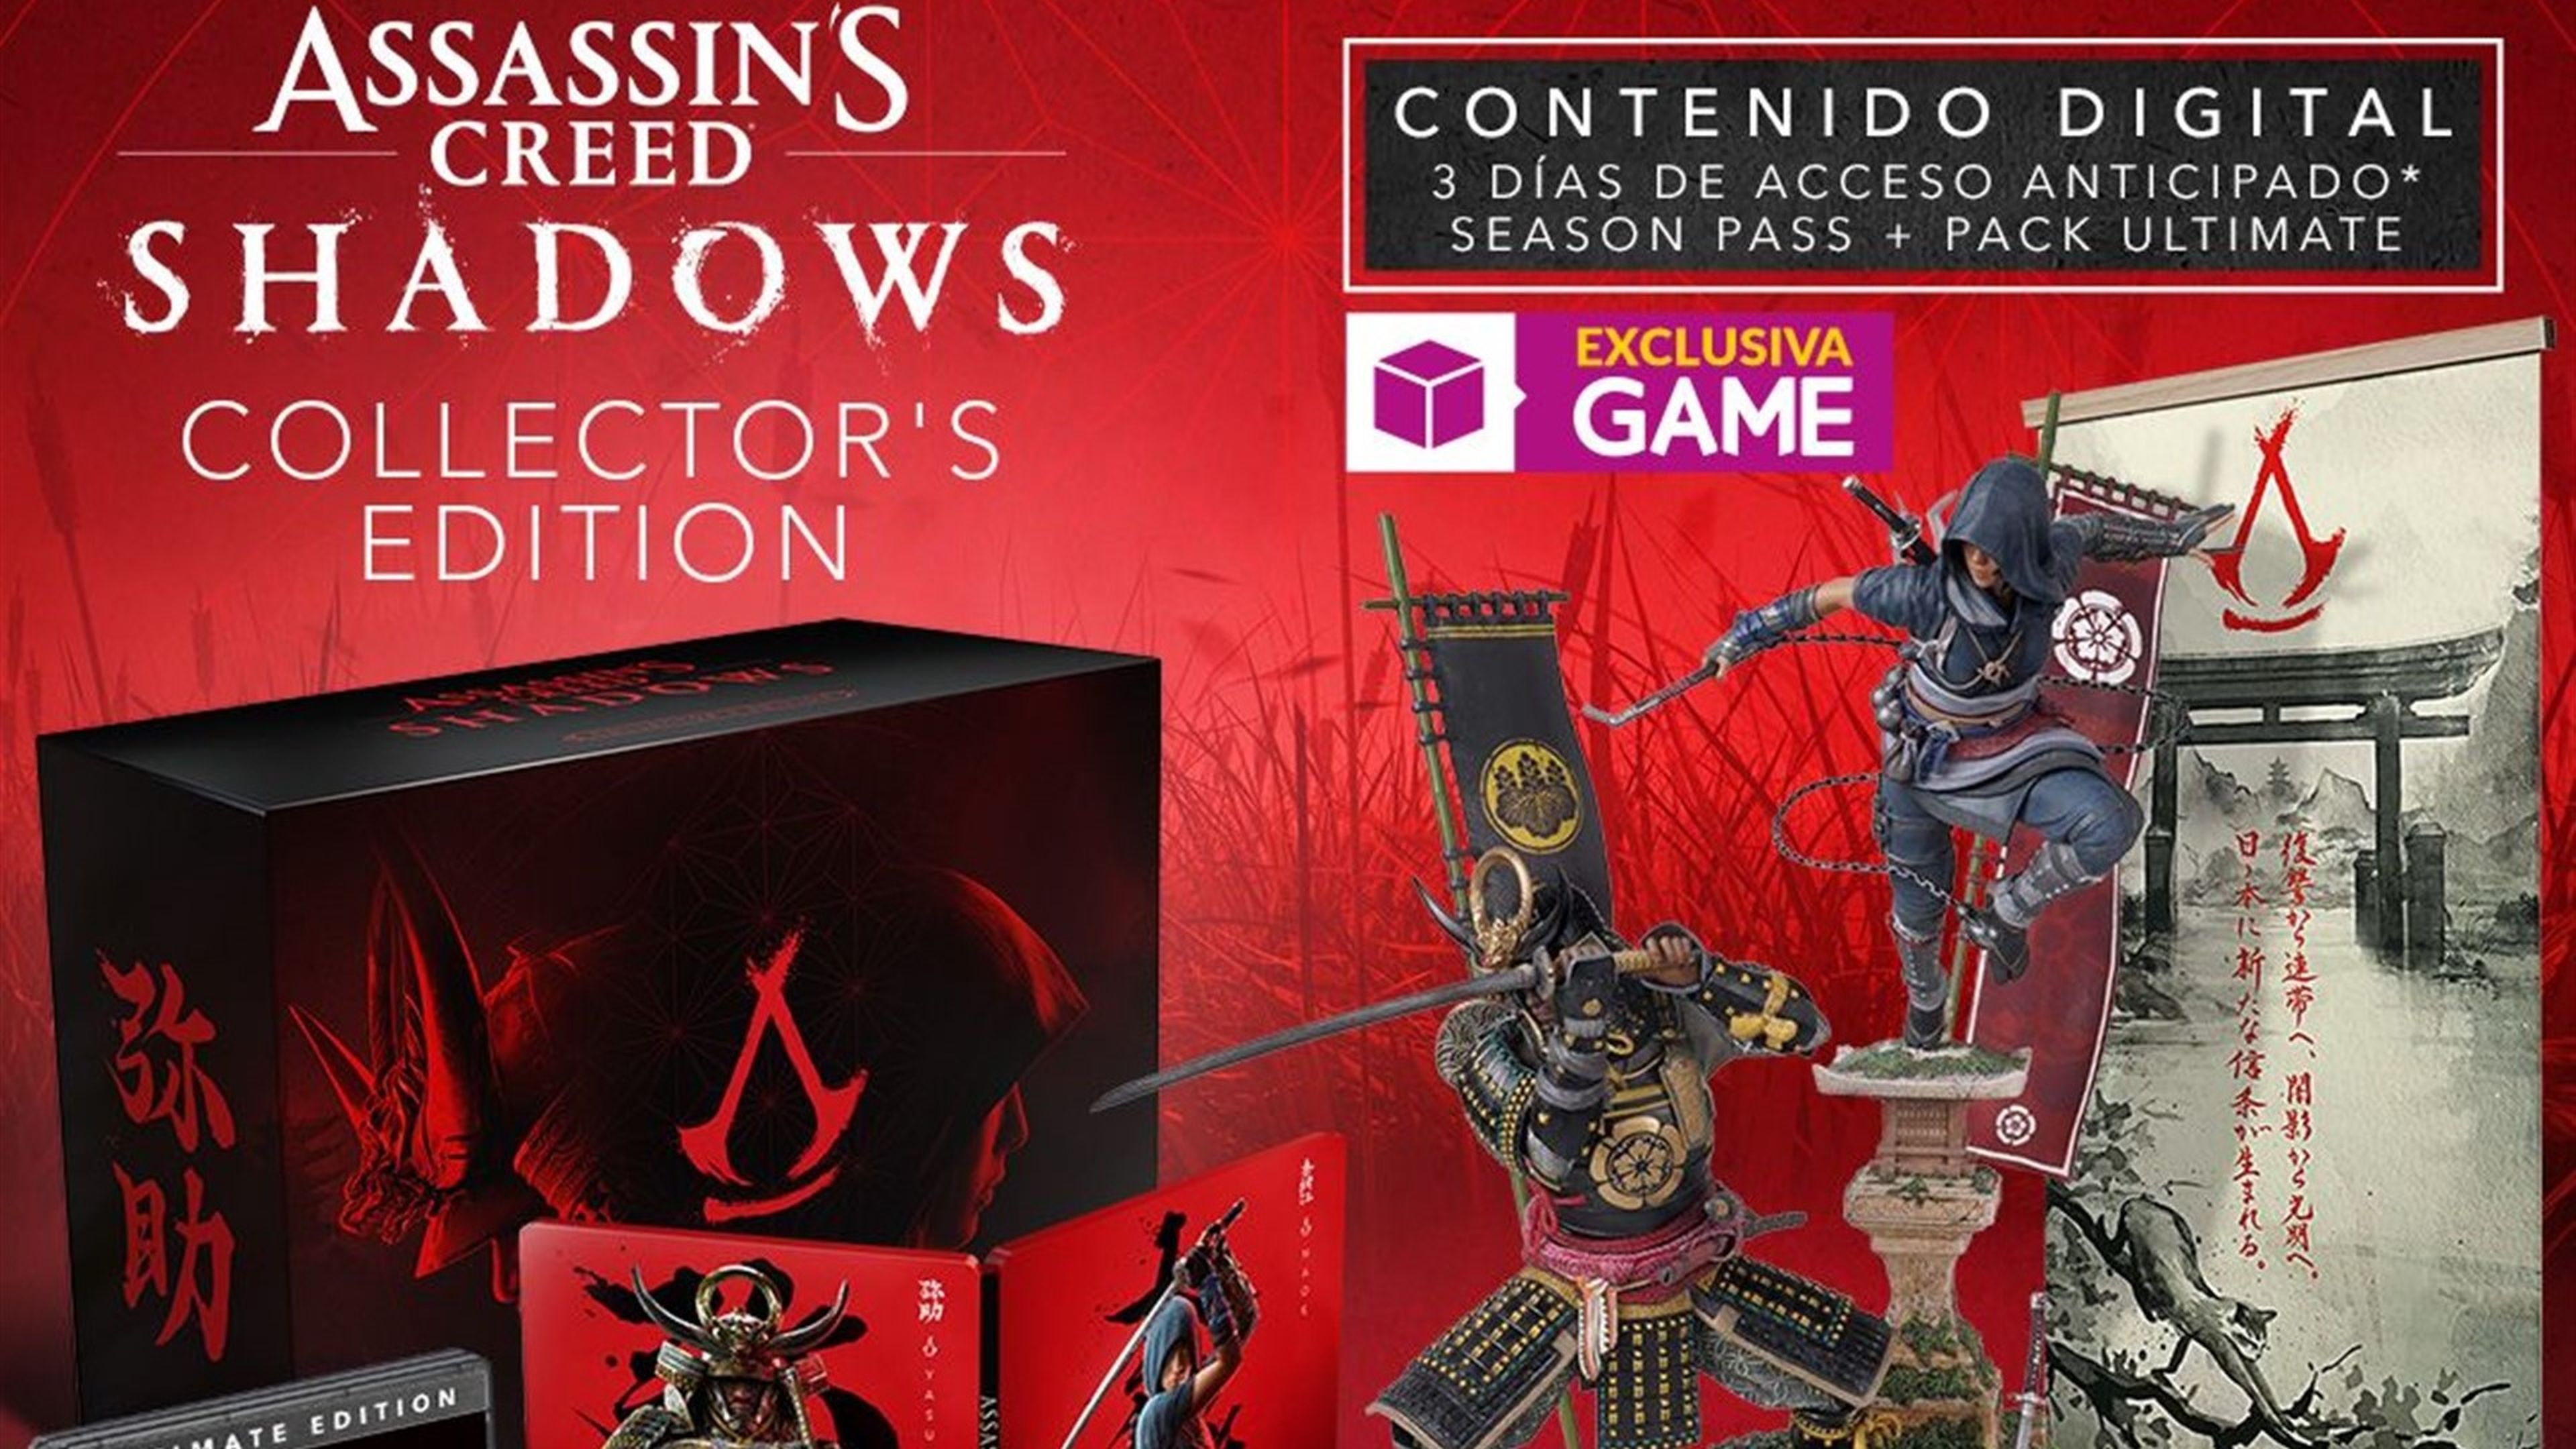 Assassin's creed Shadows en GAME